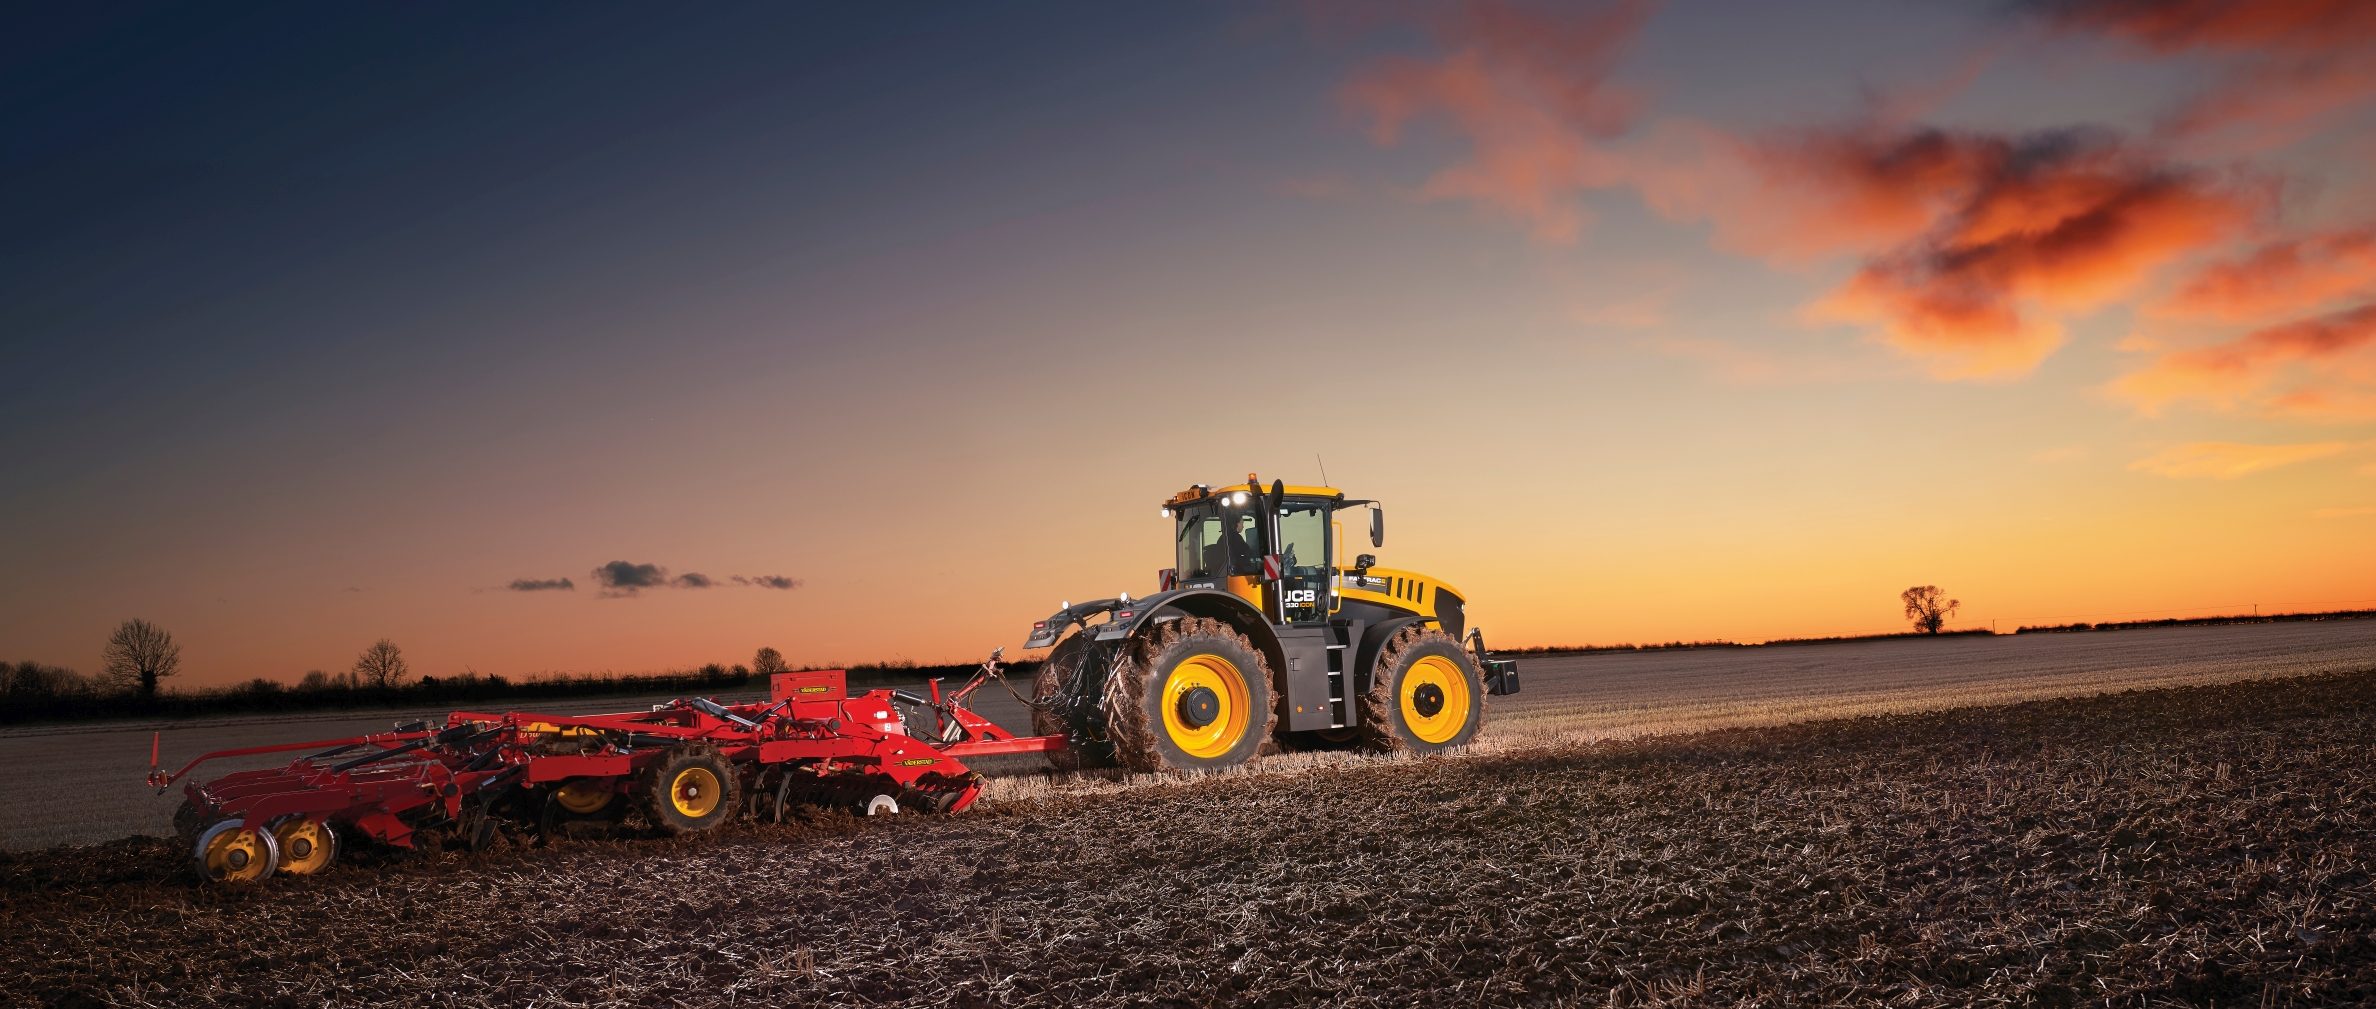 Tractors For Sale - Tractor - Farm Machinery Sales - JCB 8310